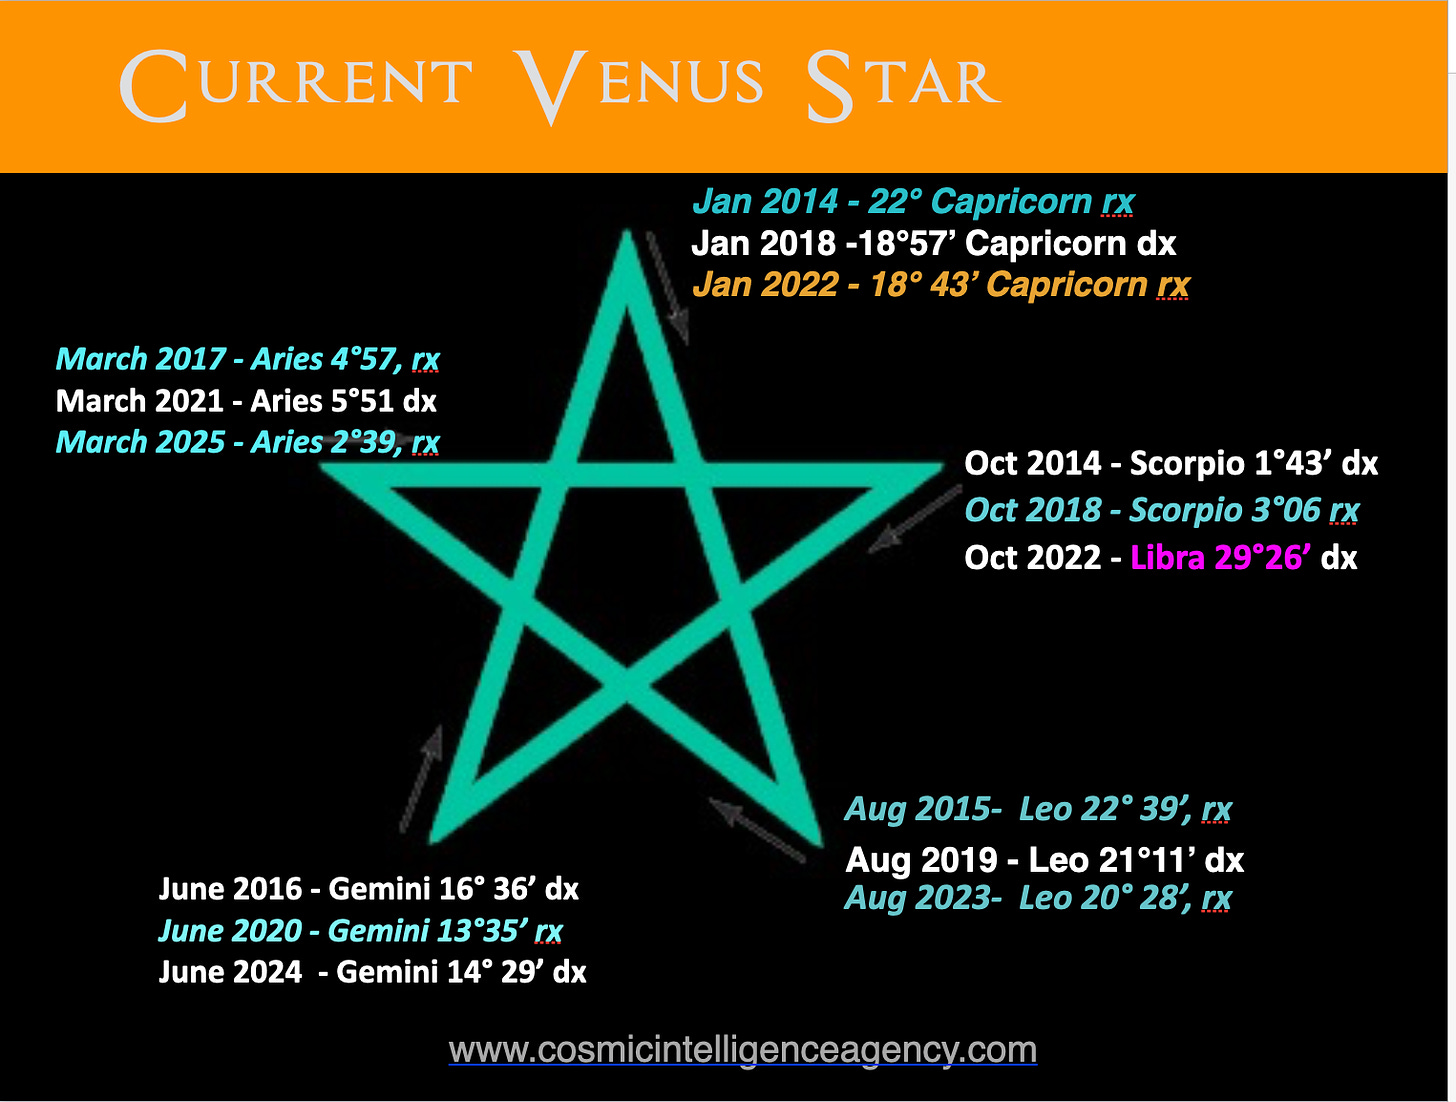 The next Venus Star Loop – Capricorn/Libra/Leo January 2022 - August 2023 -  Cosmic*Intelligence*Agency